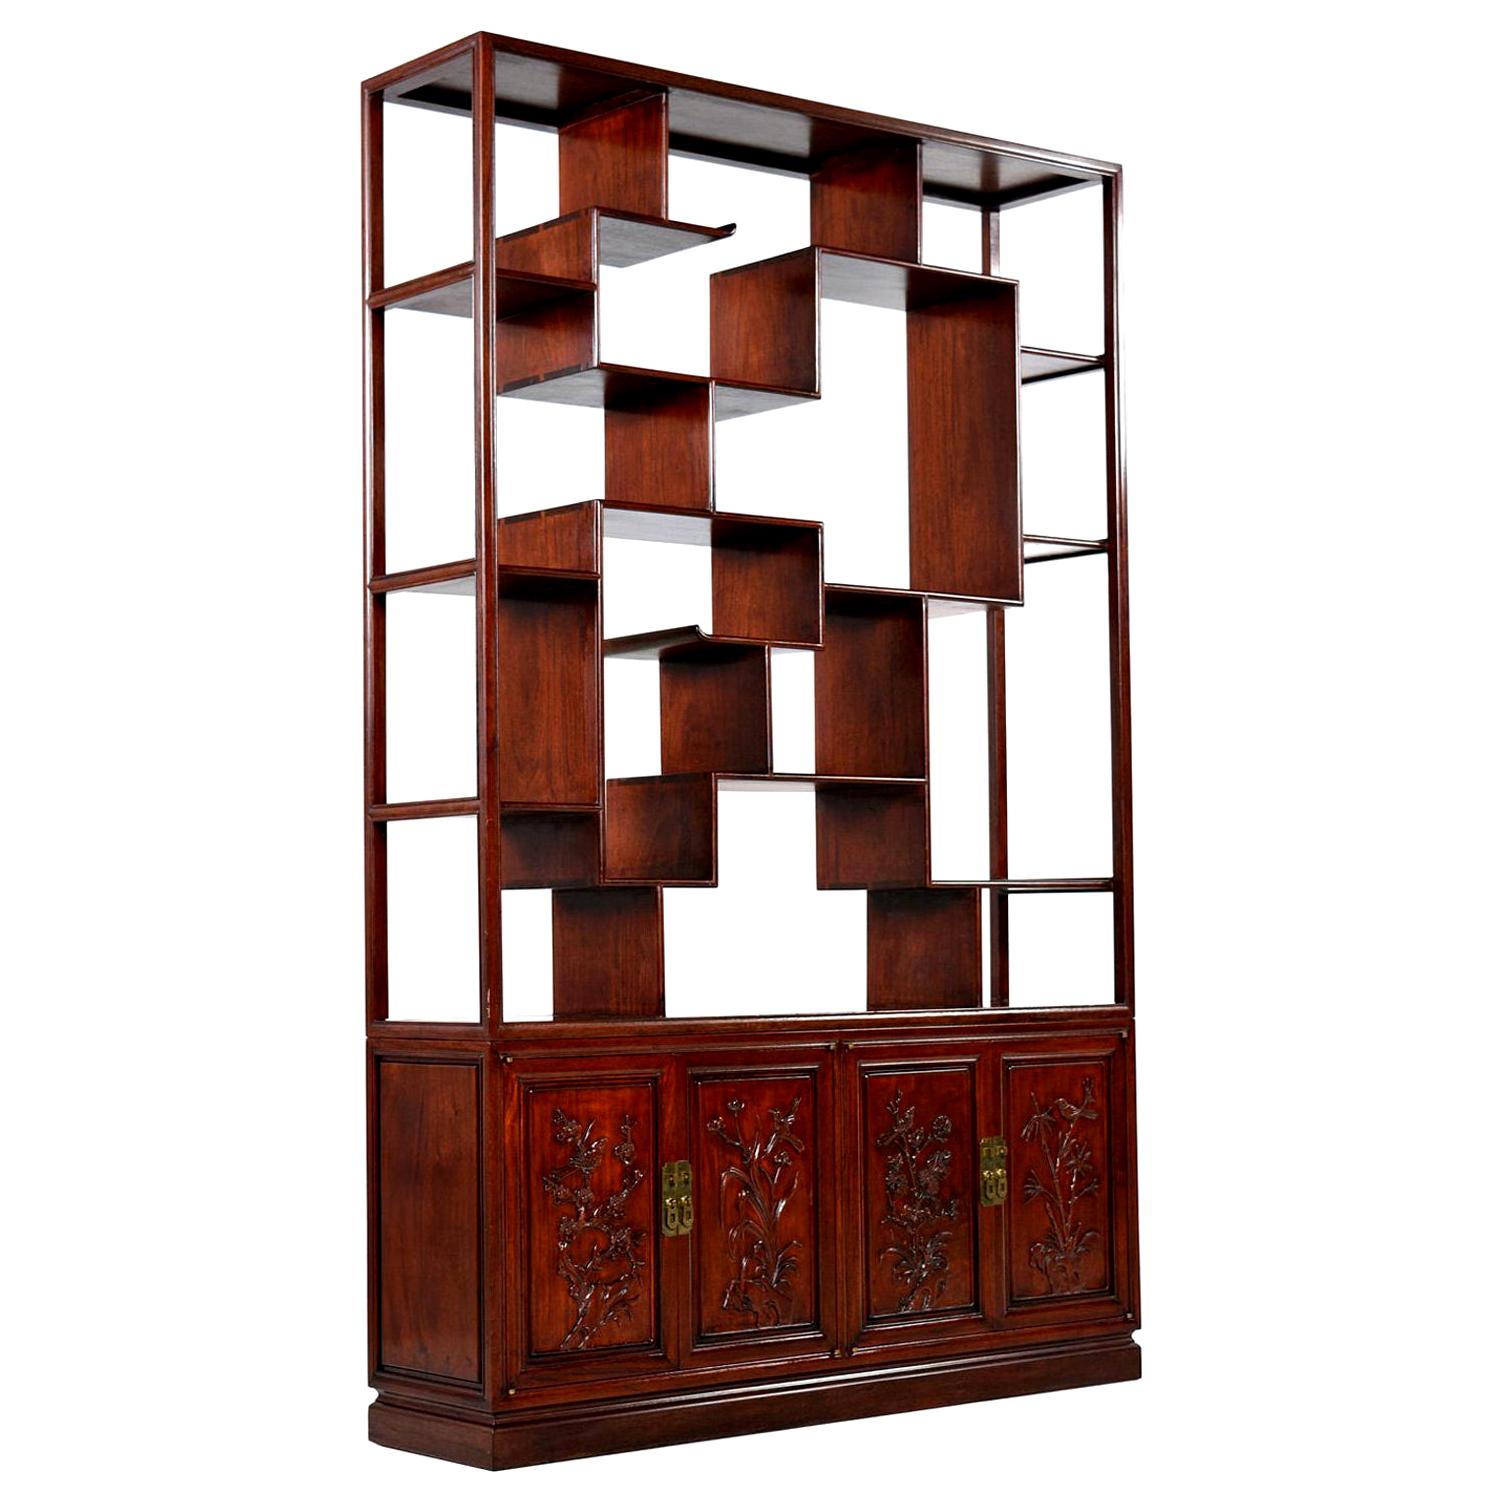 Rosewood Room Divider Cabinet Bookshelf, Asian Modern